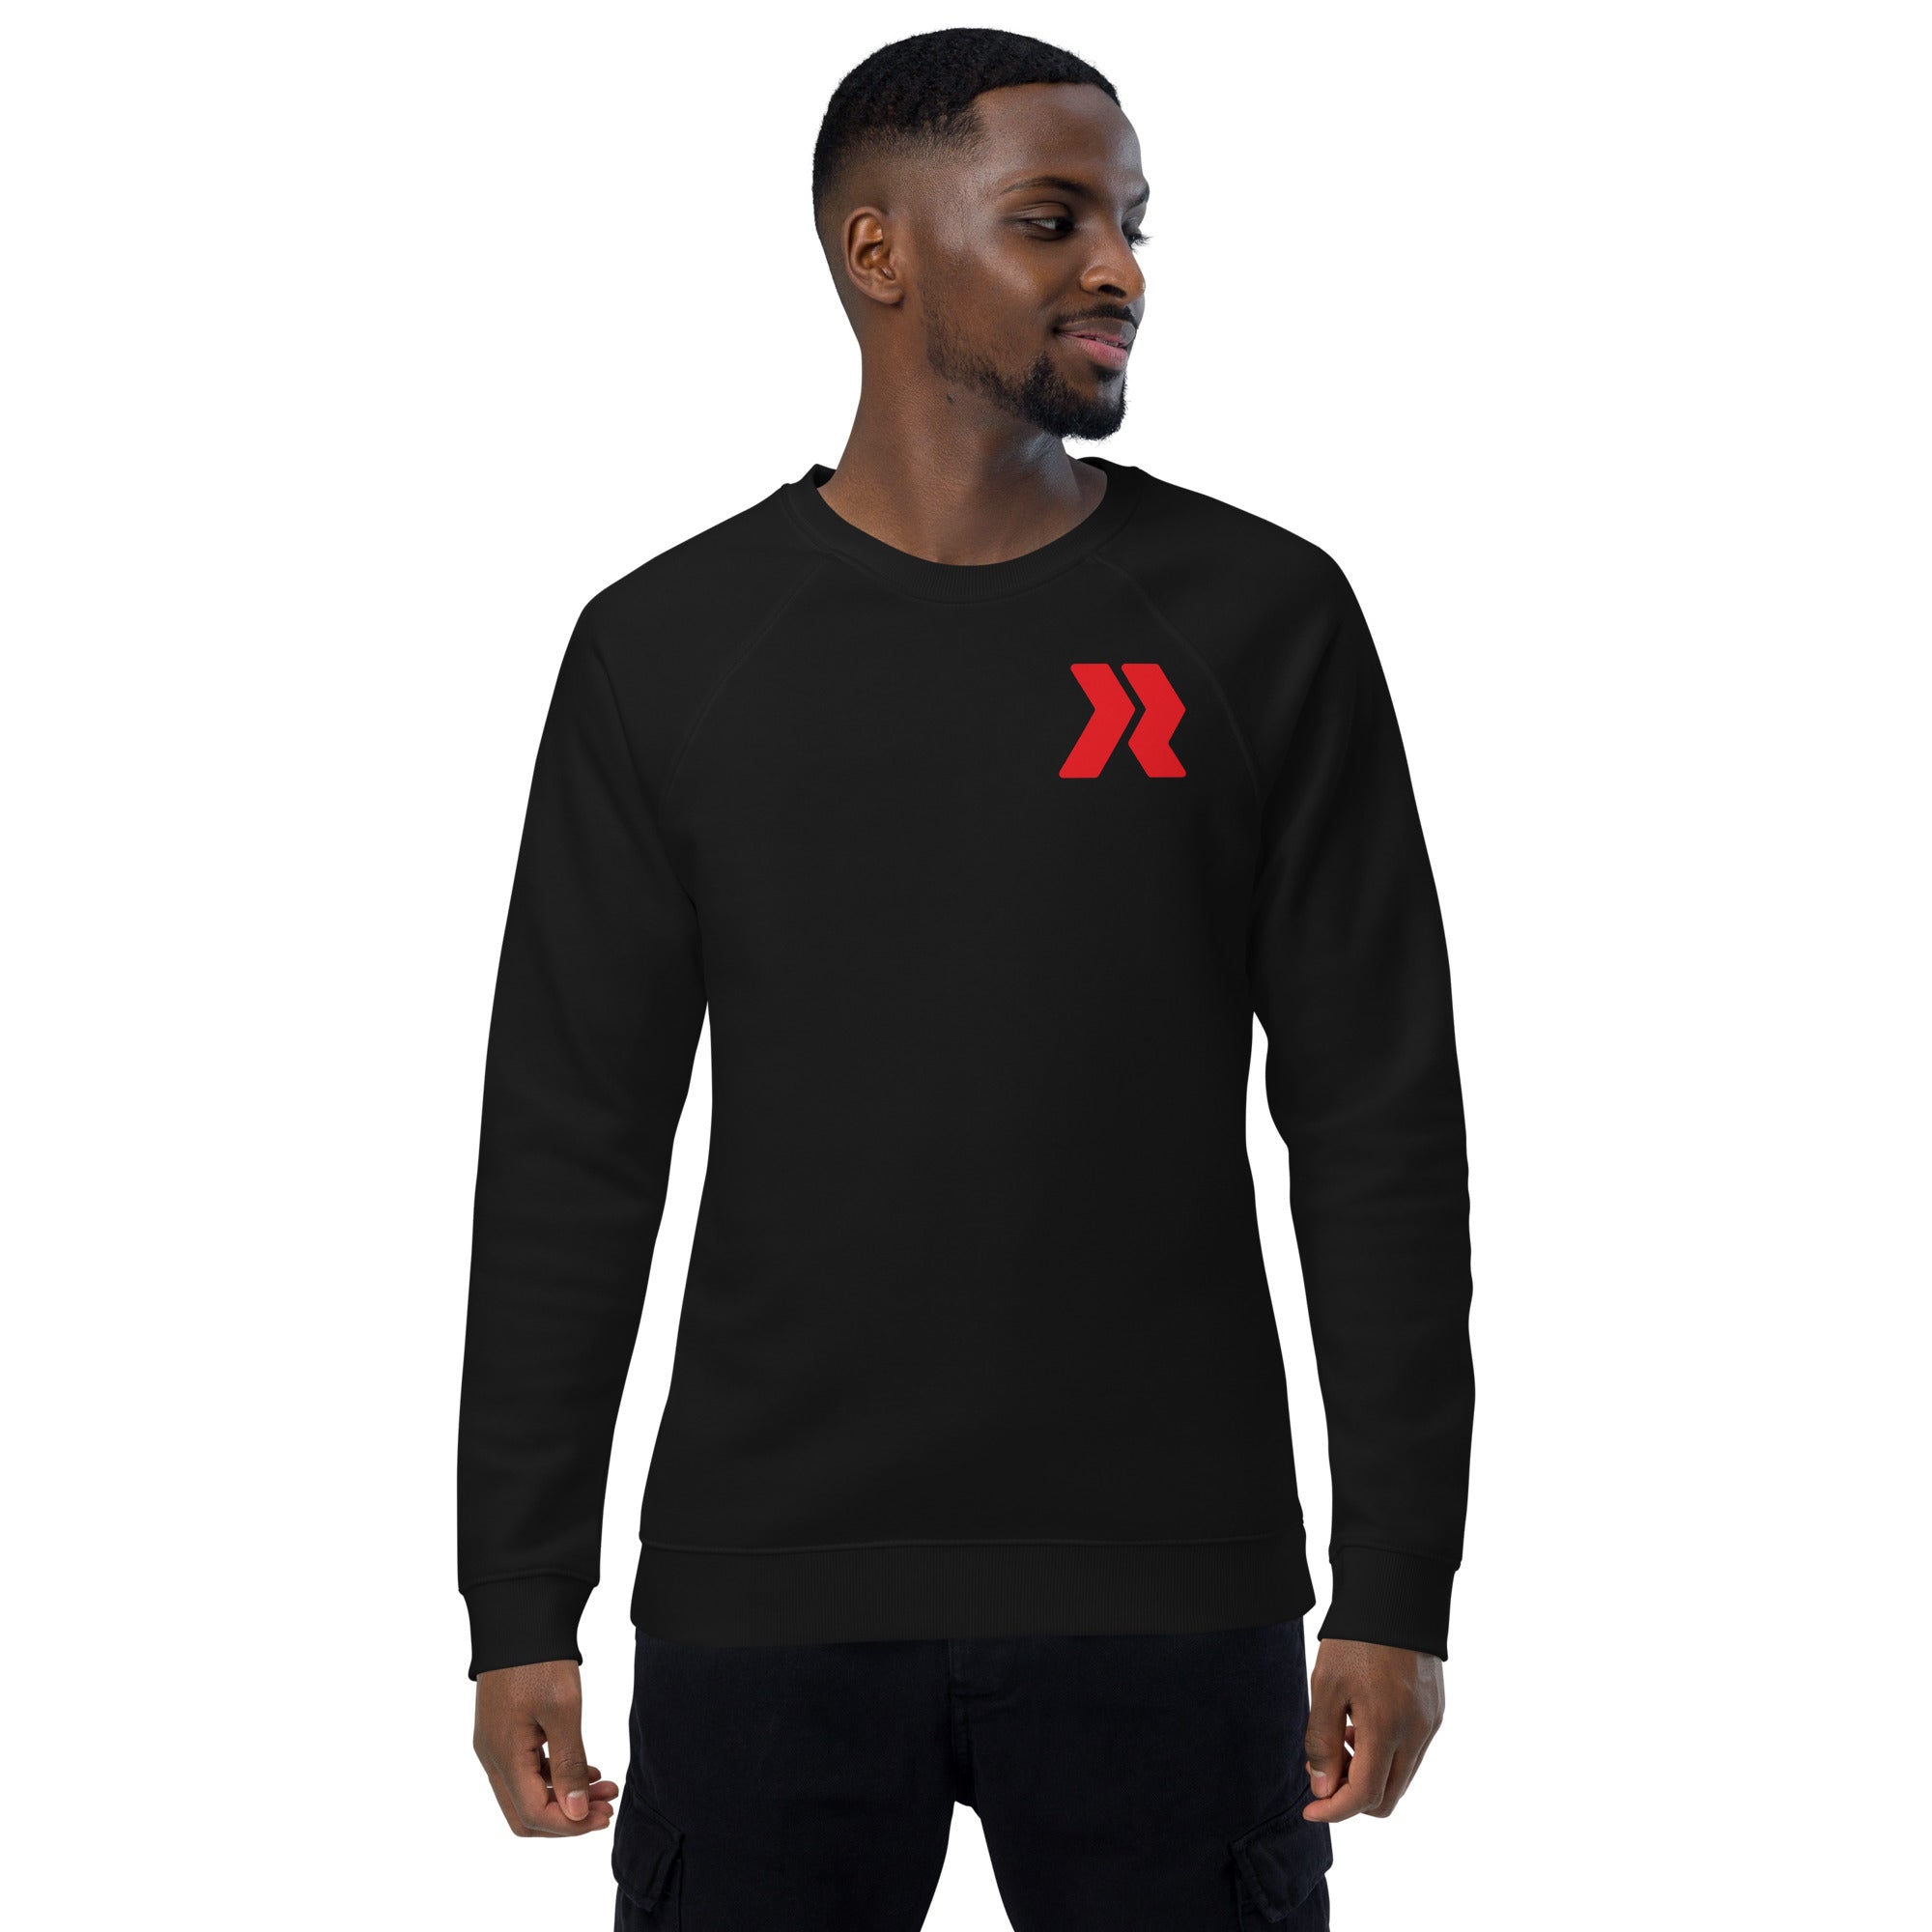 BG Logo R - Back R/W - Black Unisex organic raglan sweatshirt